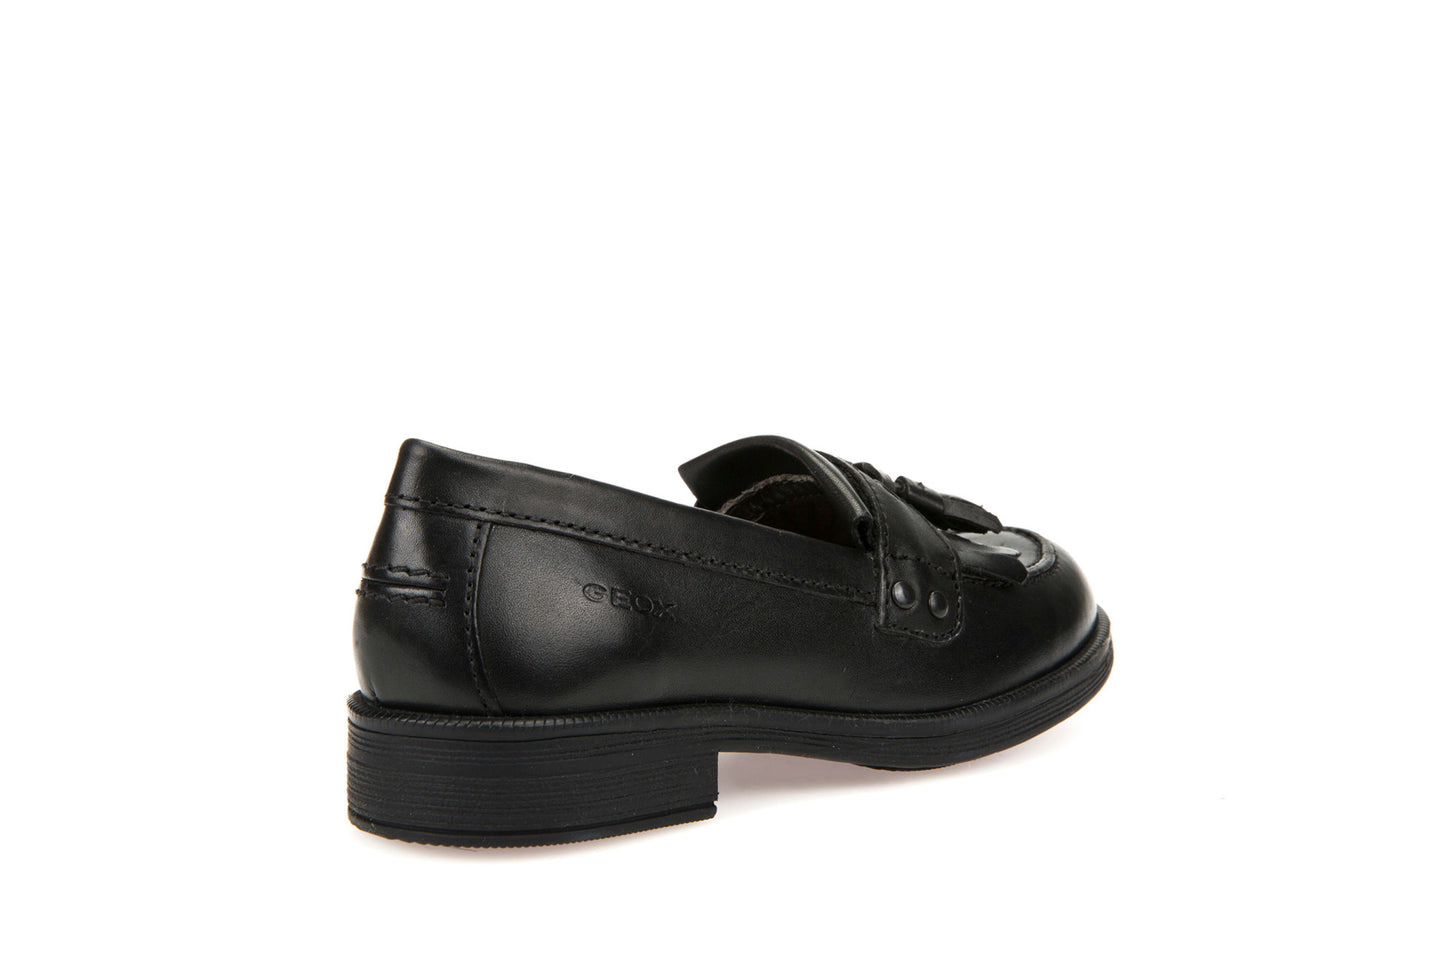 Agata Loafer With Tassel Black Leather Girls School Shoe